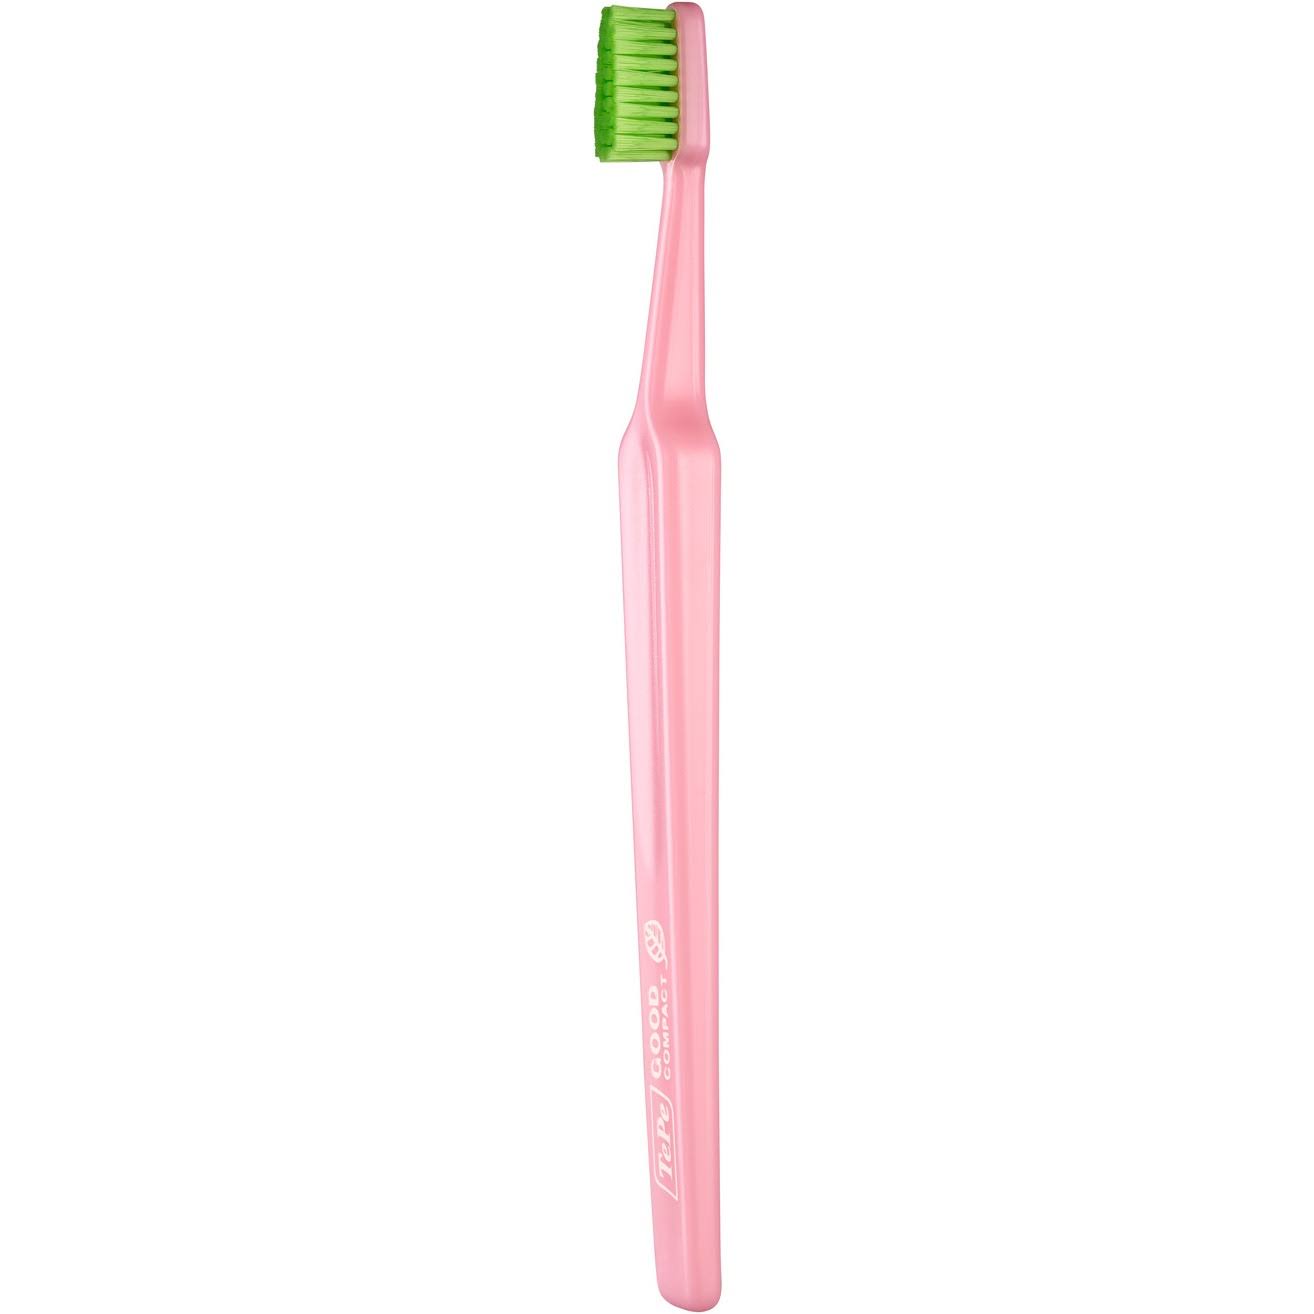 TePe Good Compact Soft Toothbrush